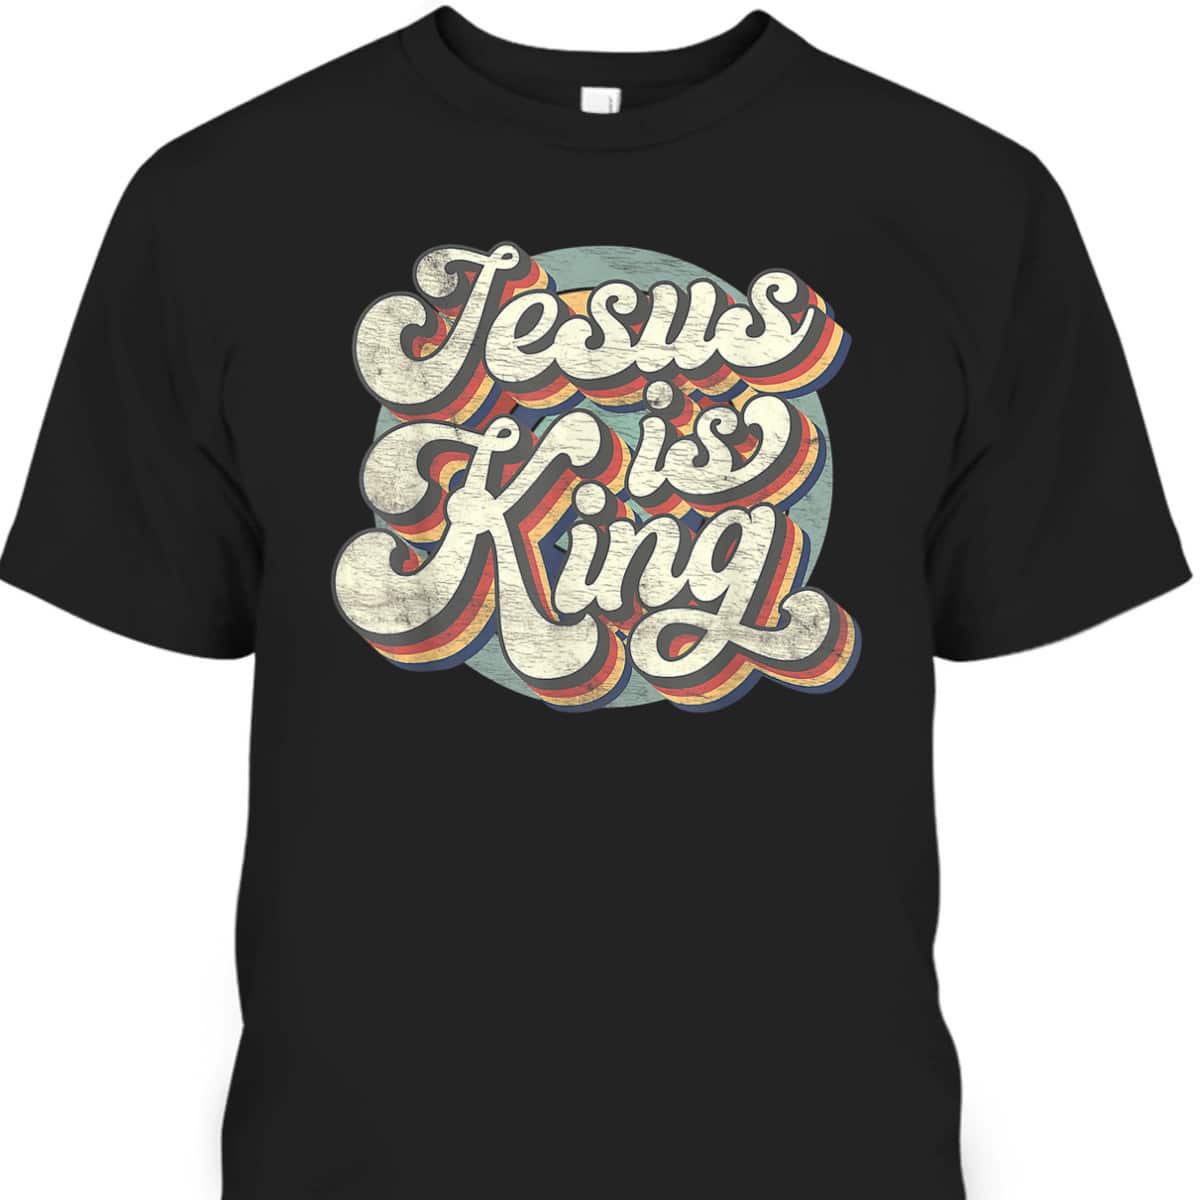 Retro Groovy Jesus Is King T-Shirt Christian Faith Bible Religious